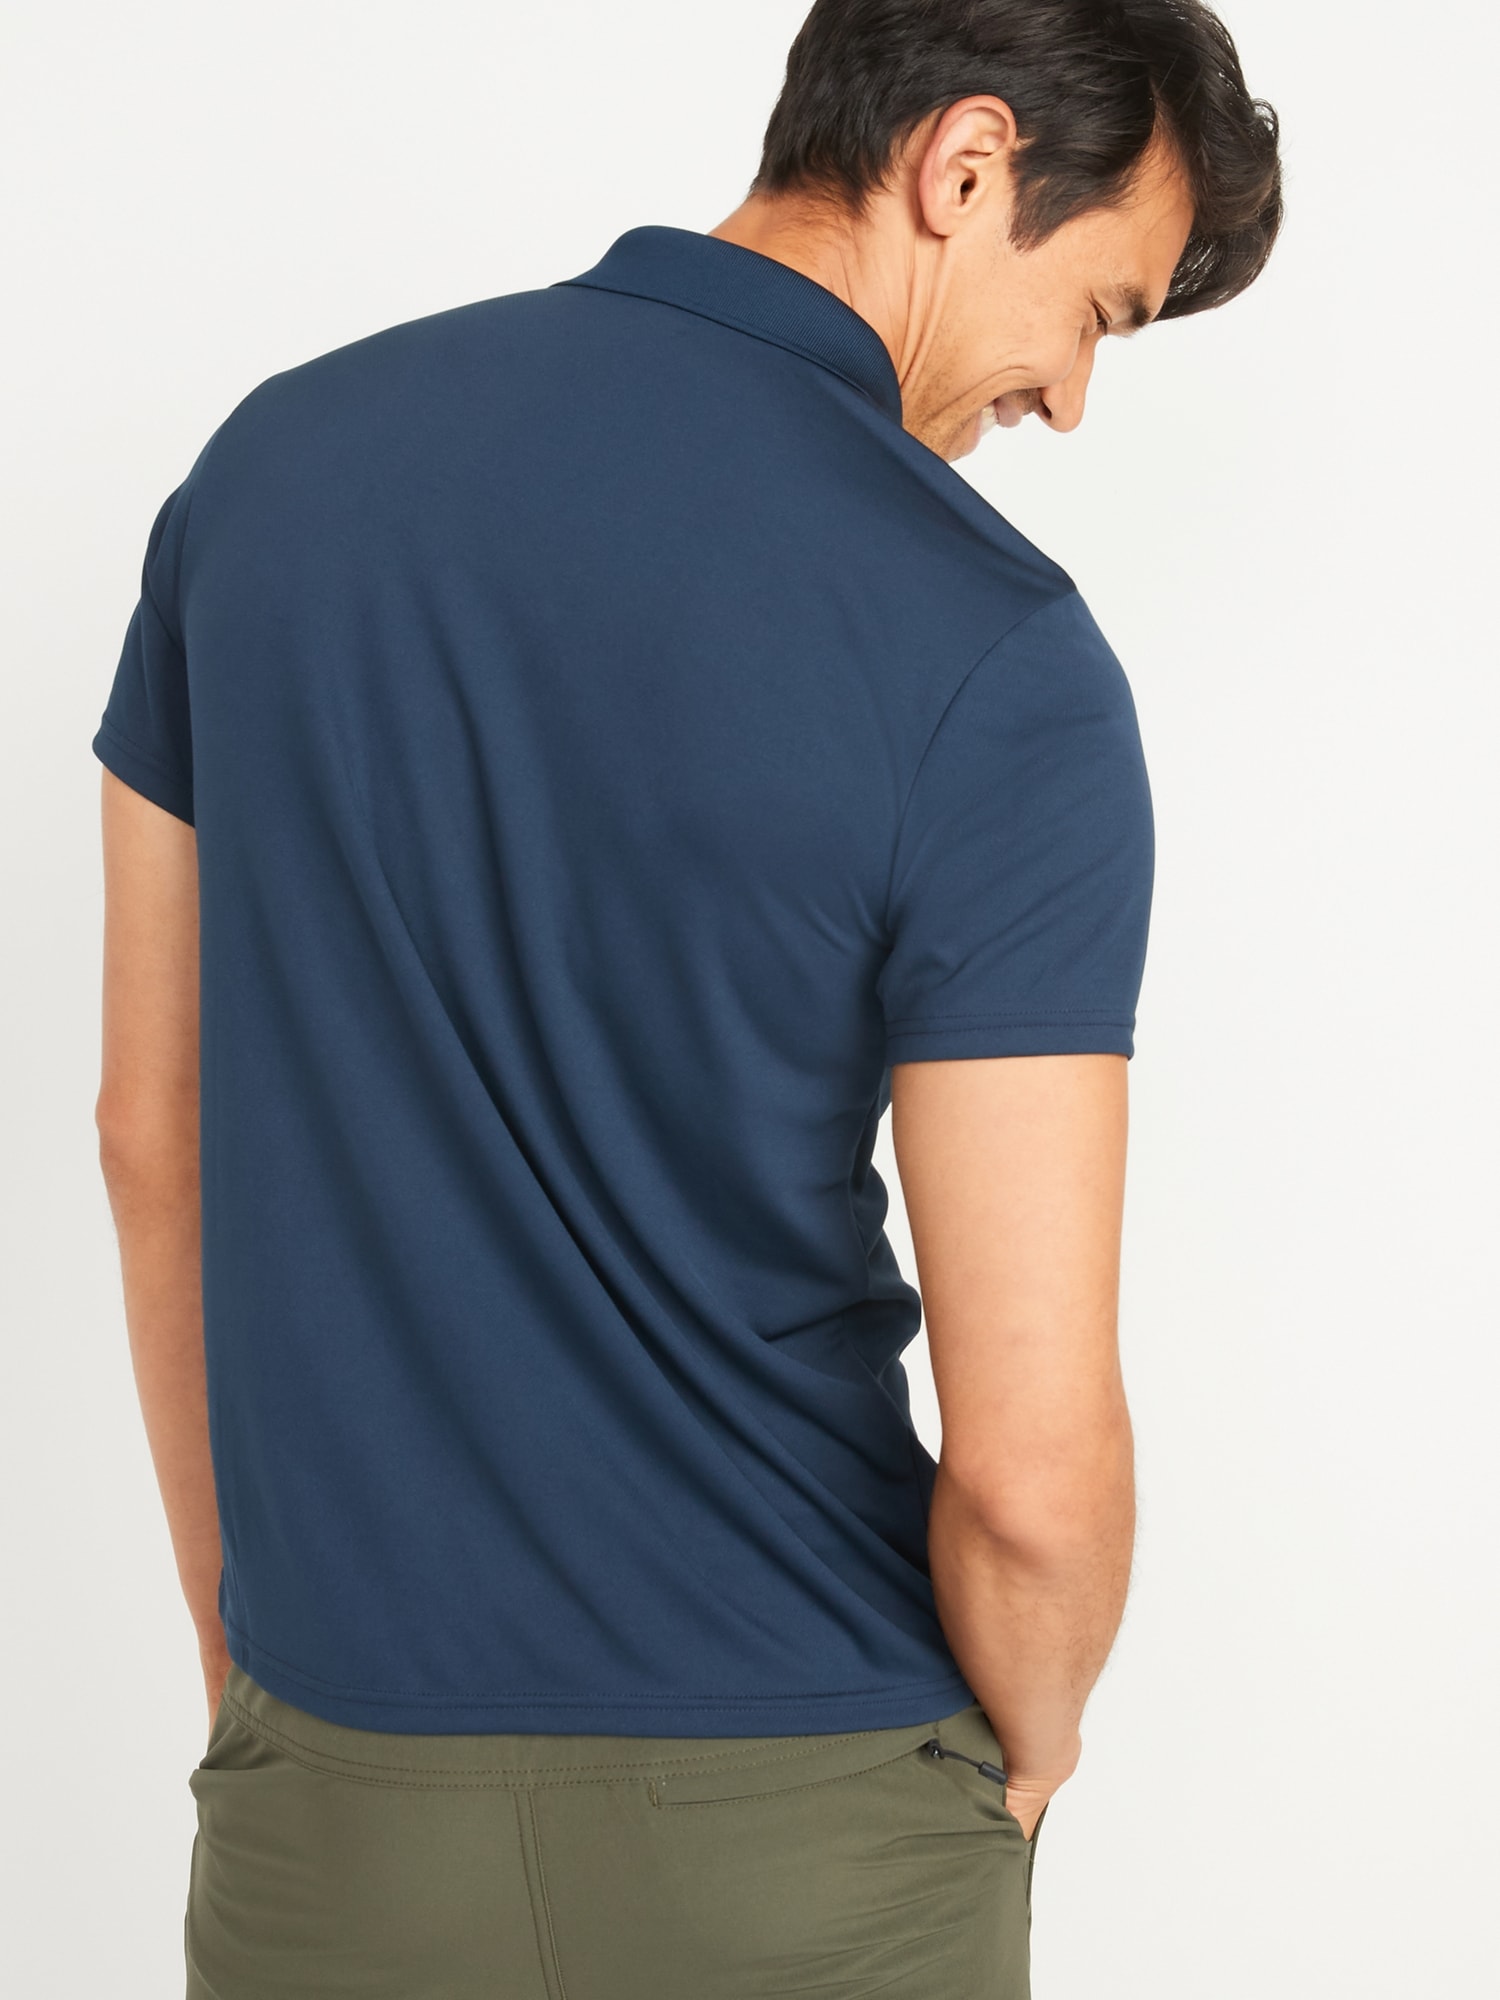 Moisture-Wicking Uniform Polo Shirt 3-Pack for Men | Old Navy